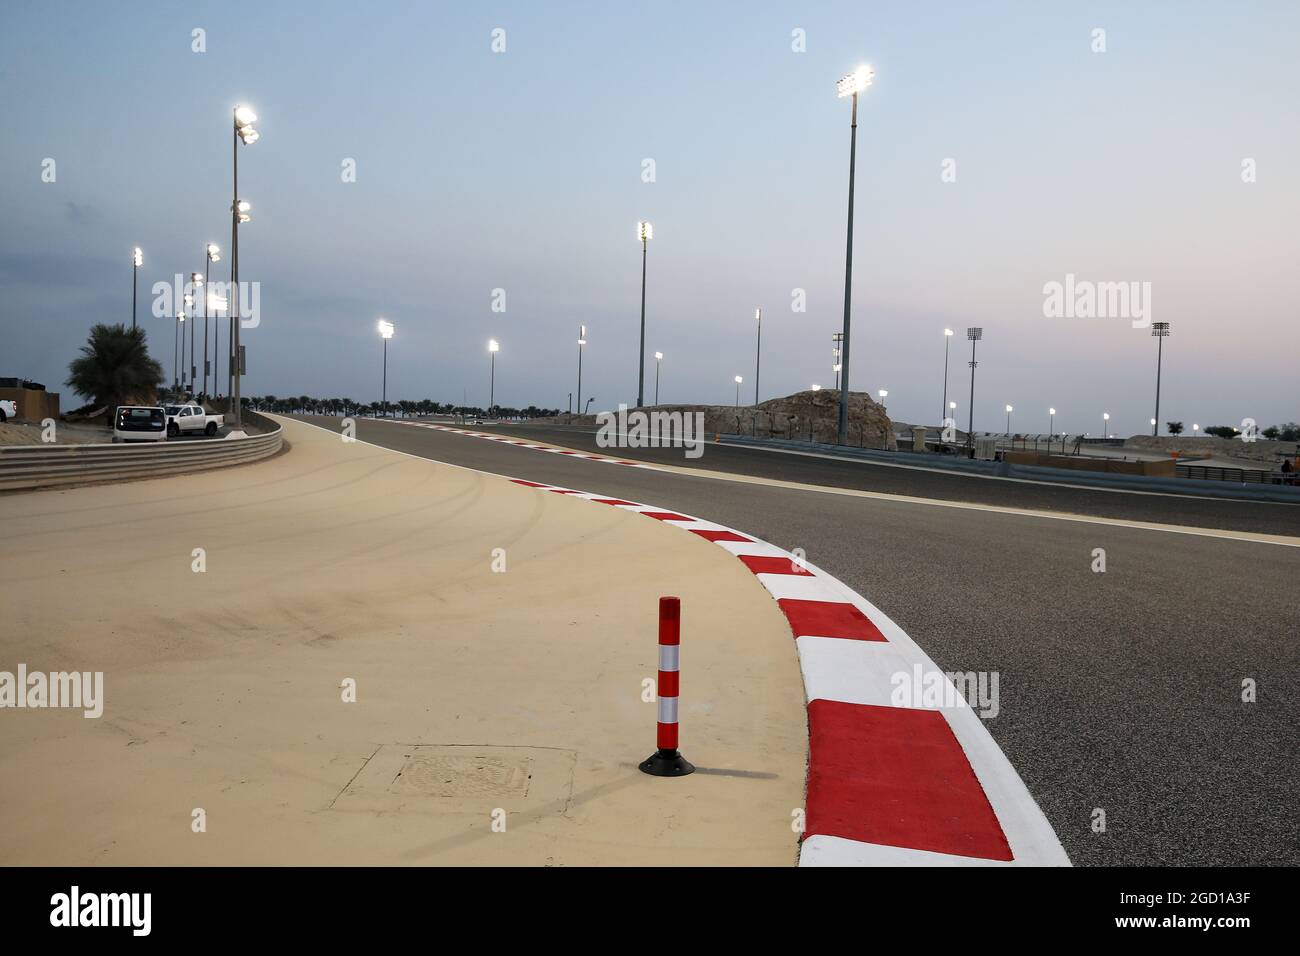 Dettaglio del circuito. Gran Premio di Sakhir, giovedì 3 dicembre 2020. Sakhir, Bahrein. Foto Stock